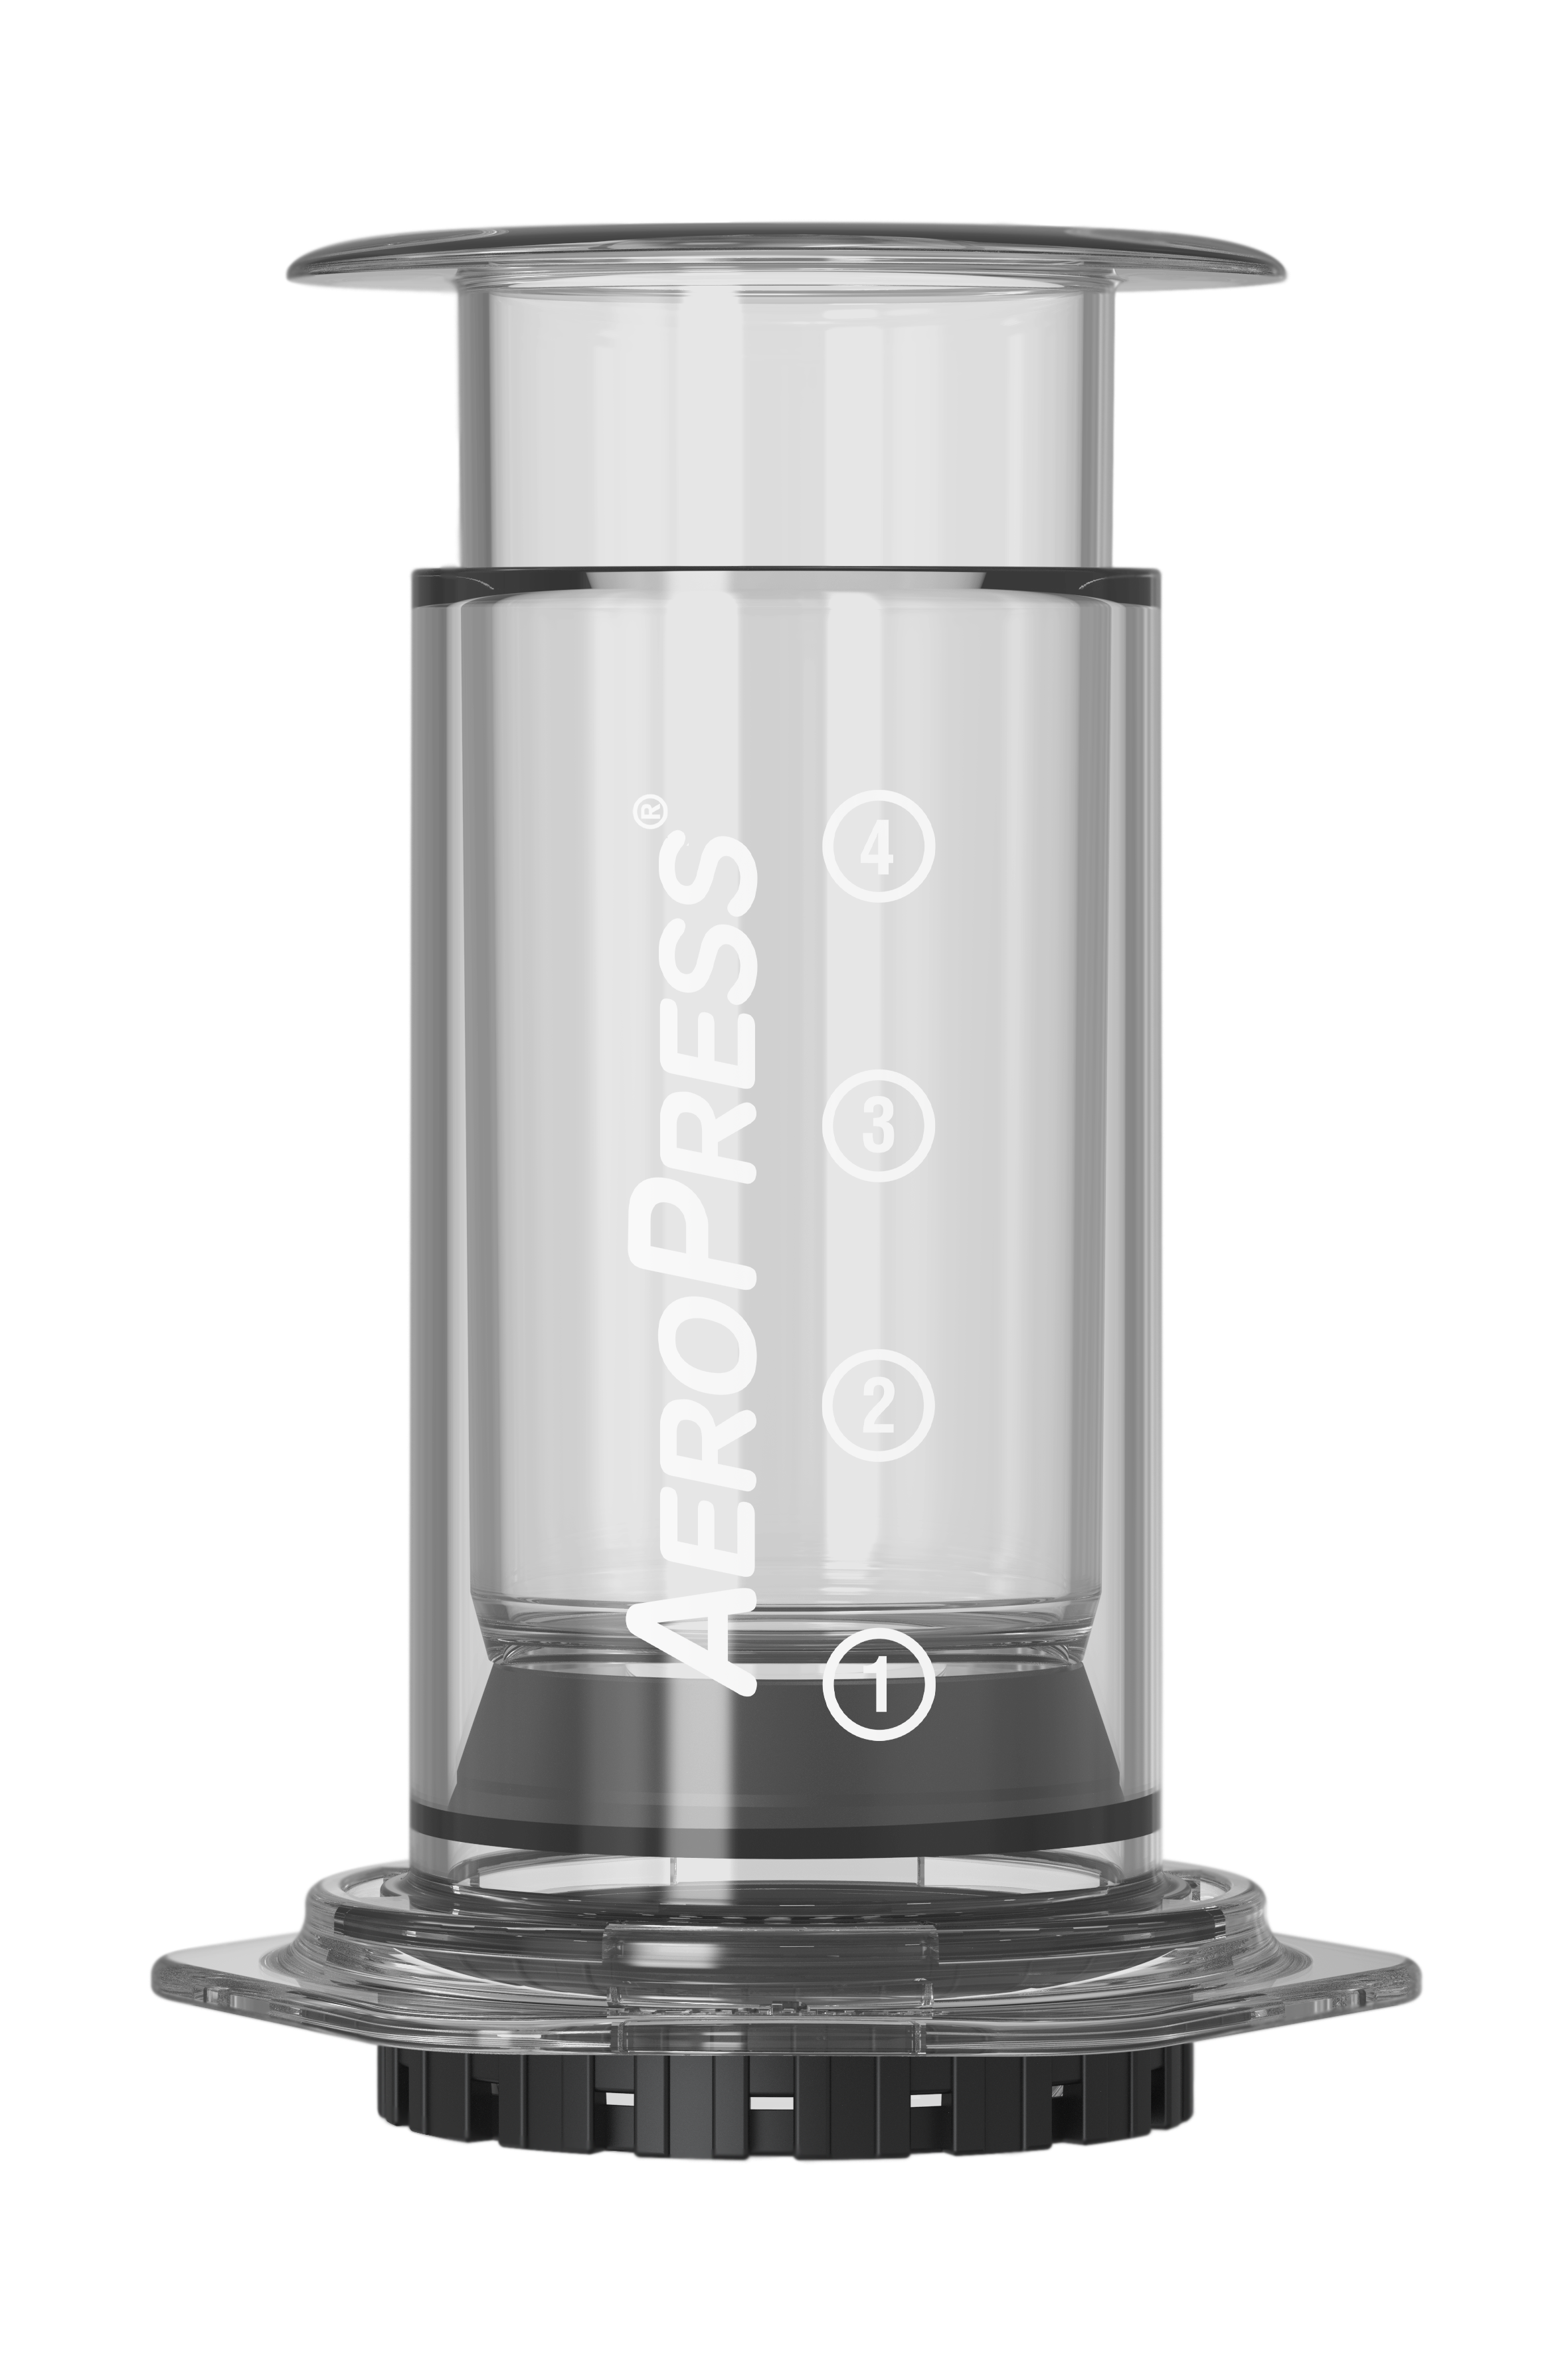 AeroPress Coffee Maker (Clear)